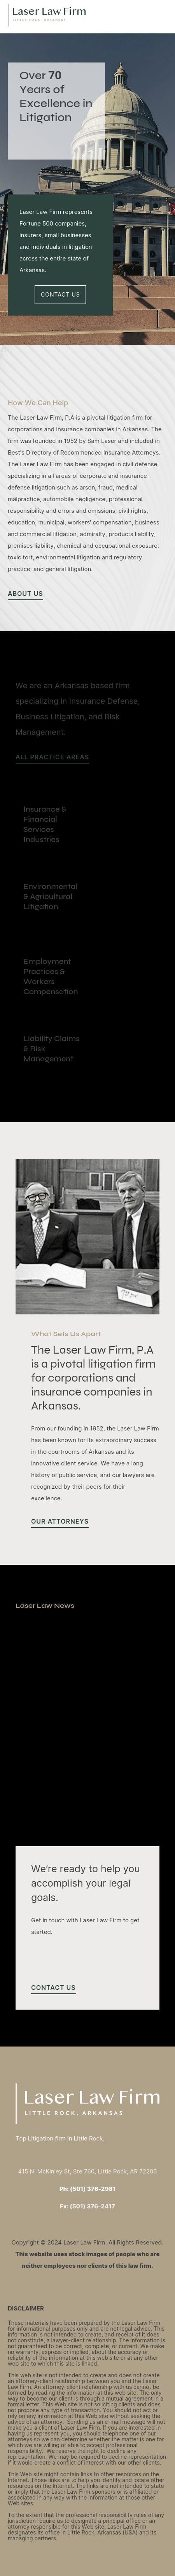 Brown Brian - Little Rock AR Lawyers